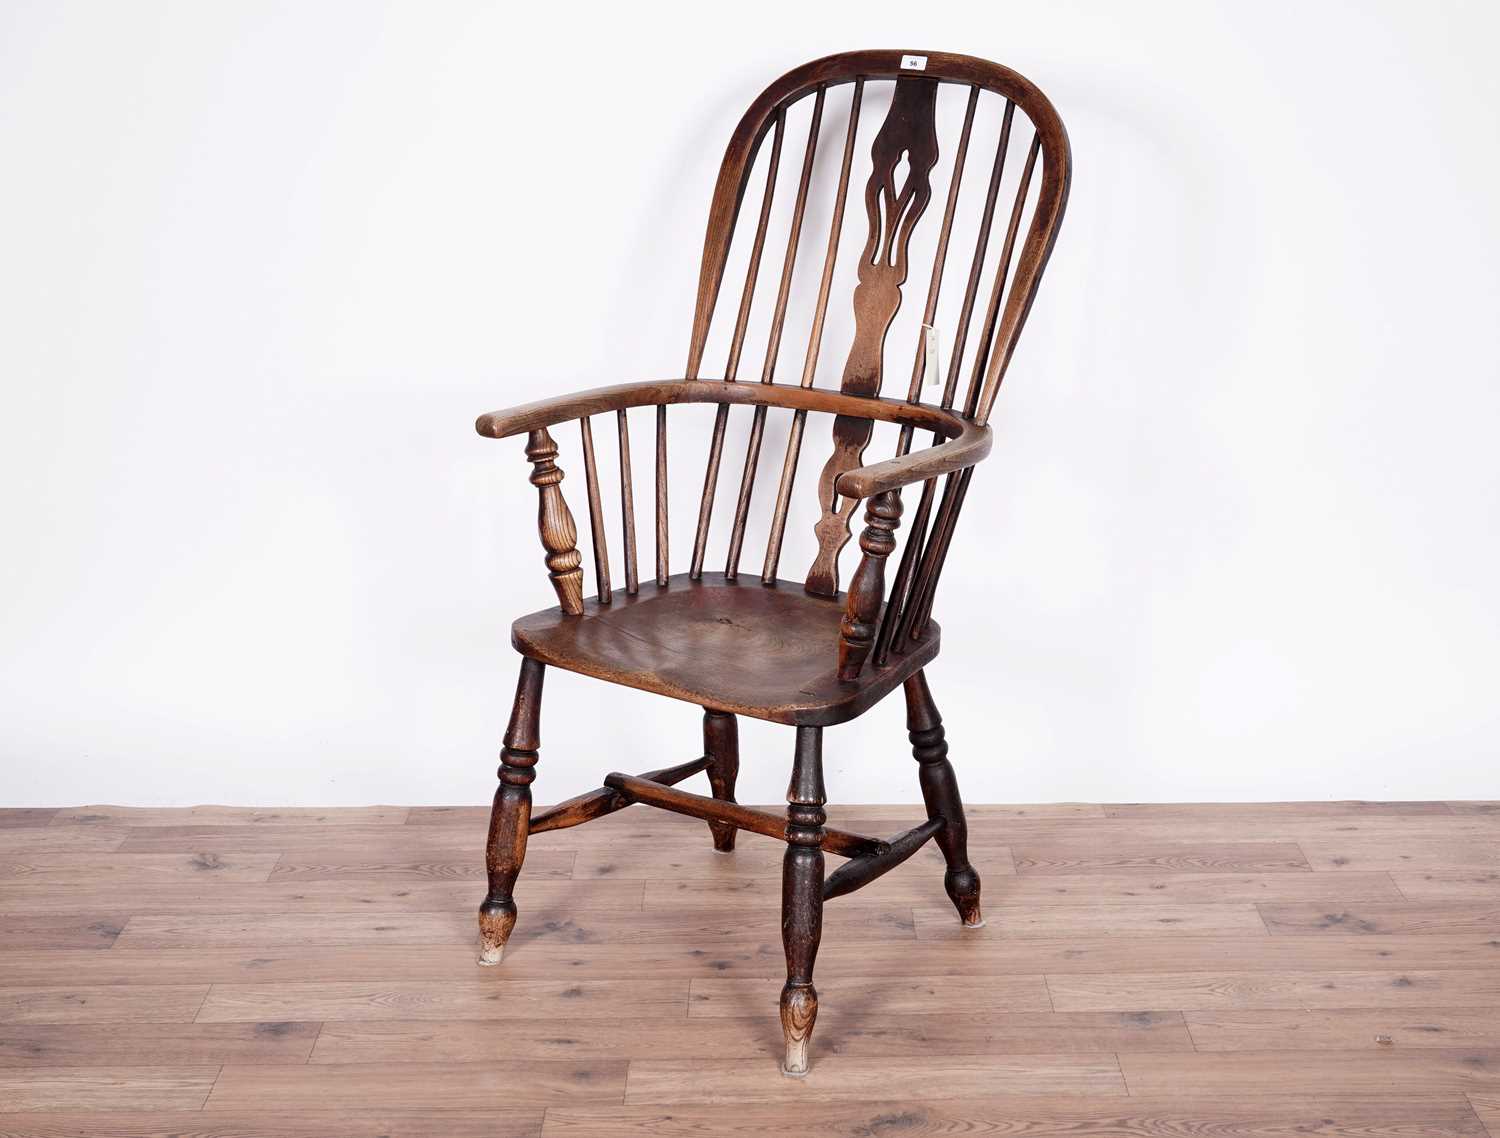 A 19th Century beech and elm Windsor chair